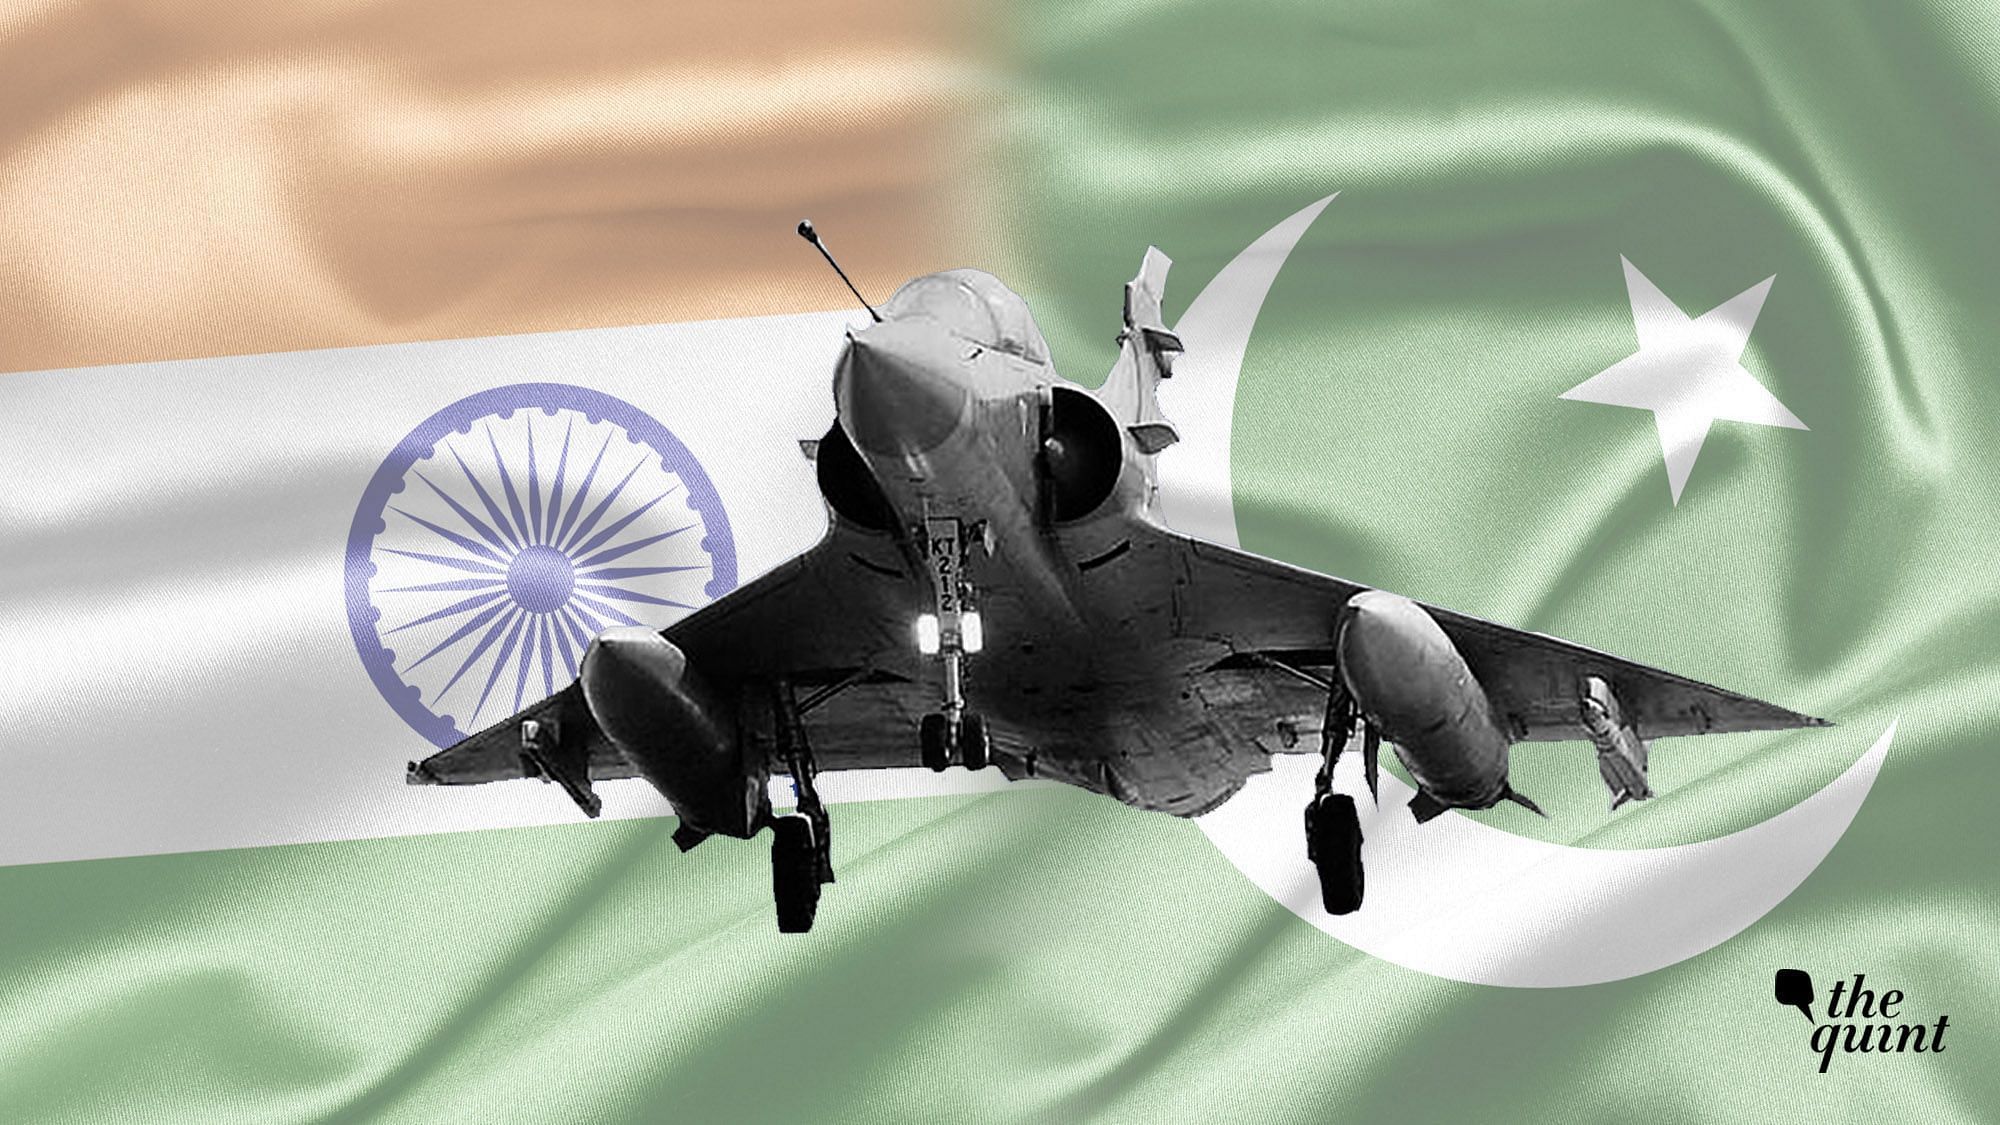 Northern Army commander Lt Gen Ranbir Singh Monday termed the IAF’s Balakot airstrike on a terrorist camp in Pakistan as a “major achievement”.